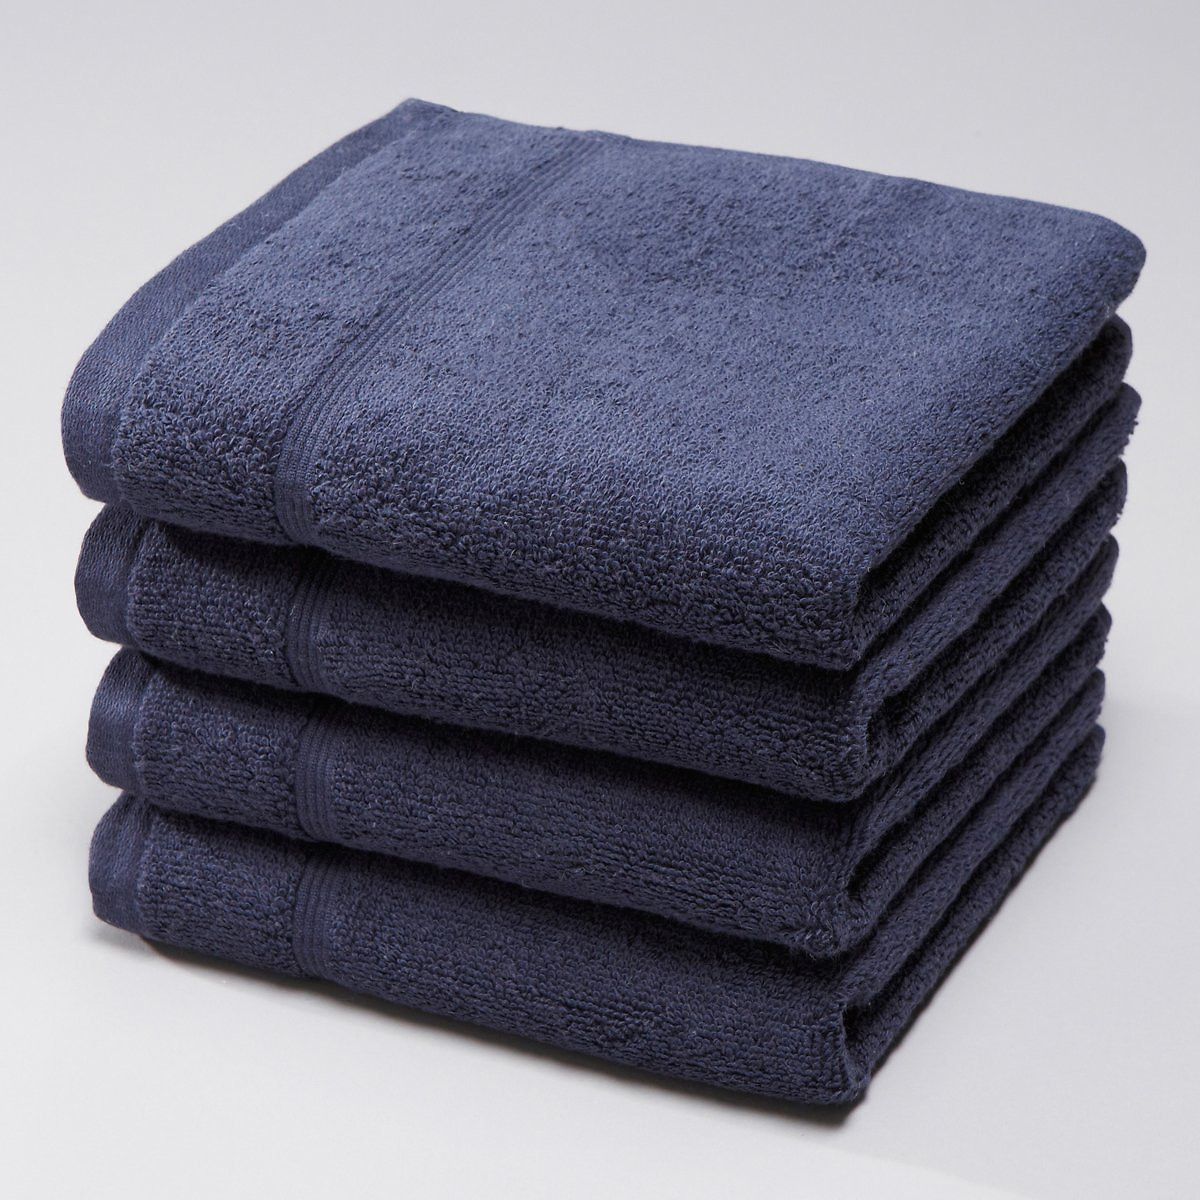 4er Pack Guest Towels Hand Towels Bath Towels Bath Towels Terry 100% Cotton 